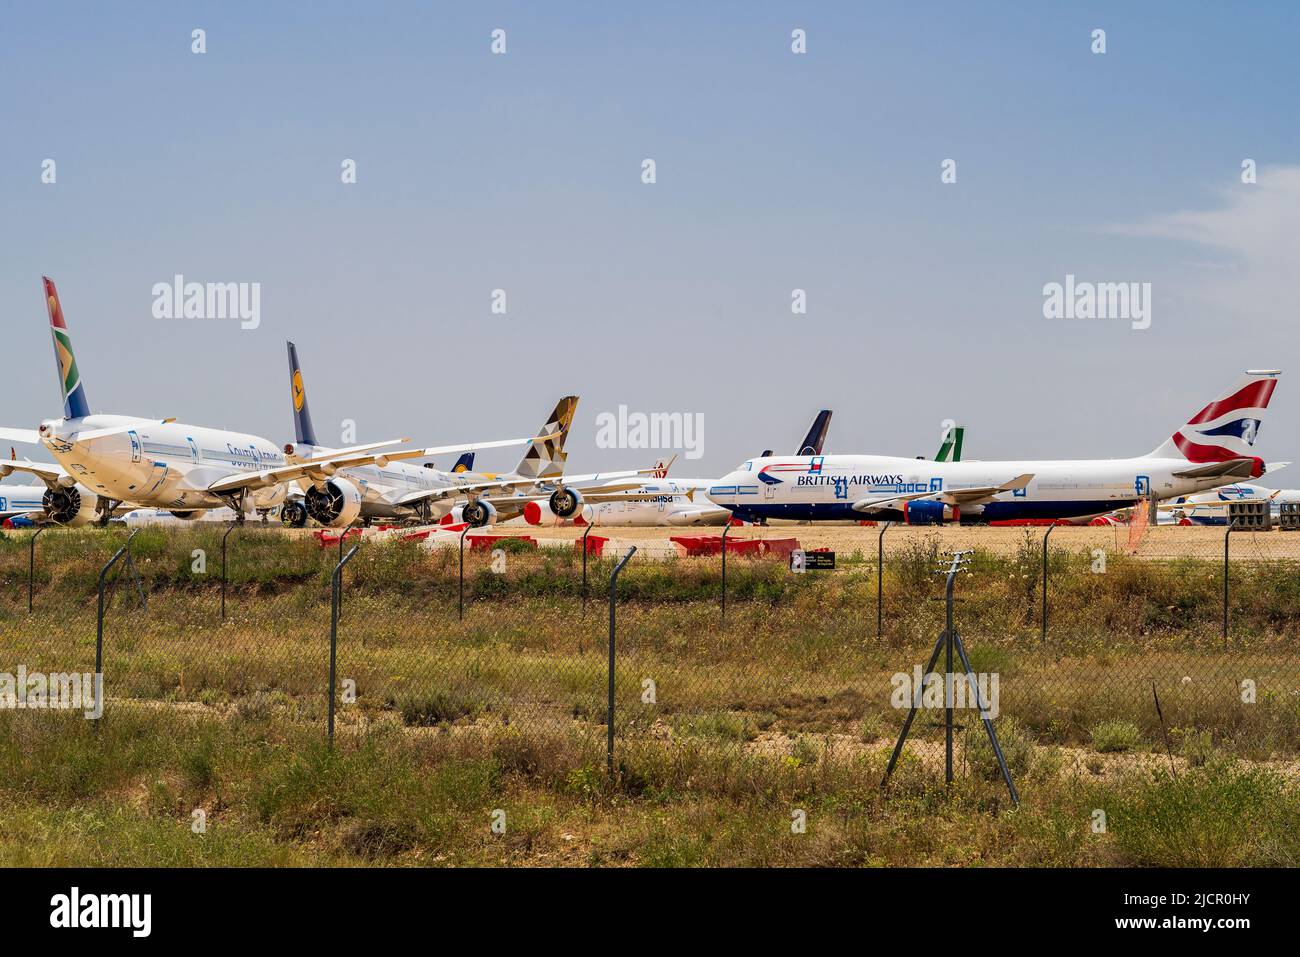 Airplanes stored at Teruel Storage airport, Teruel, Aragon, Spain Stock Photo